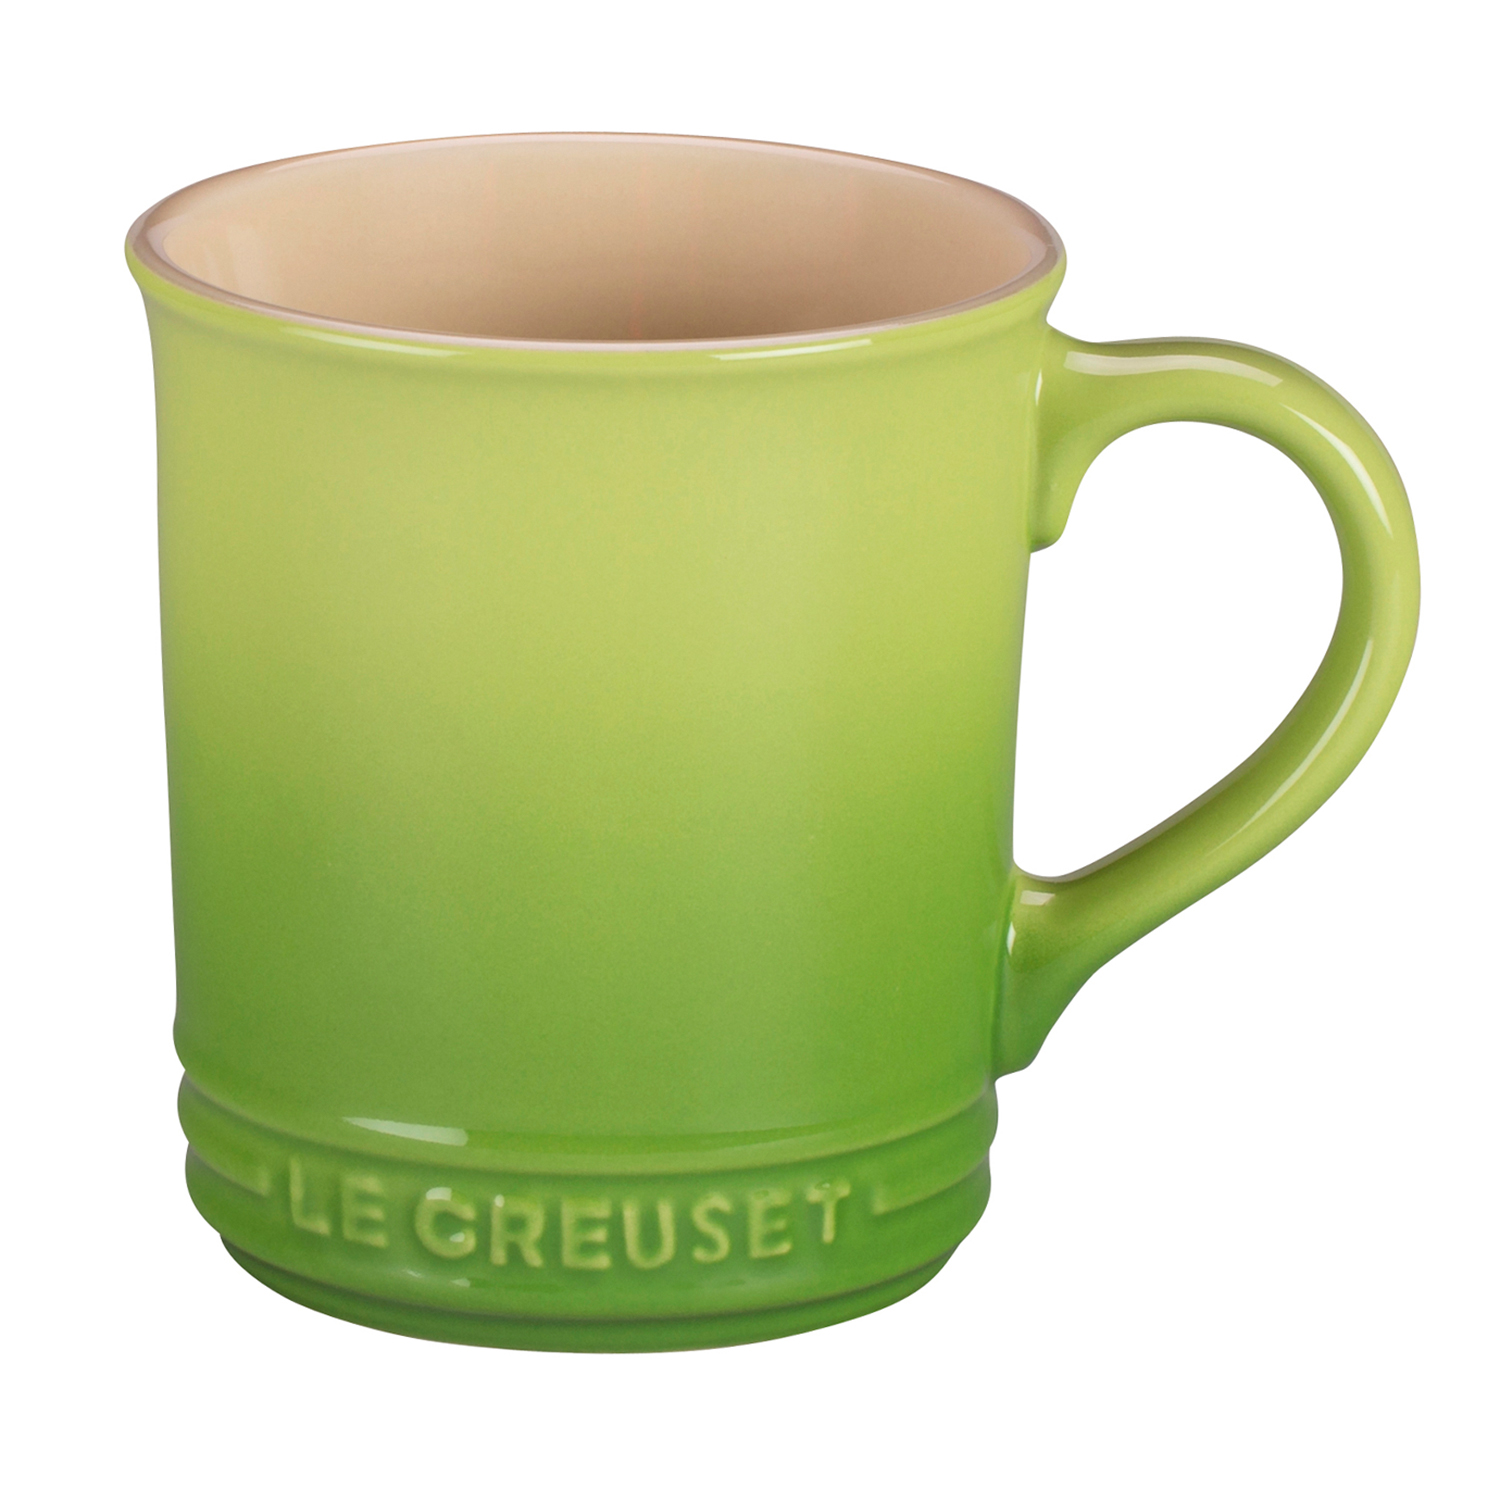 Le Creuset Stoneware Coffee Mug  2 Piece Set Green 12 oz Tea Mug